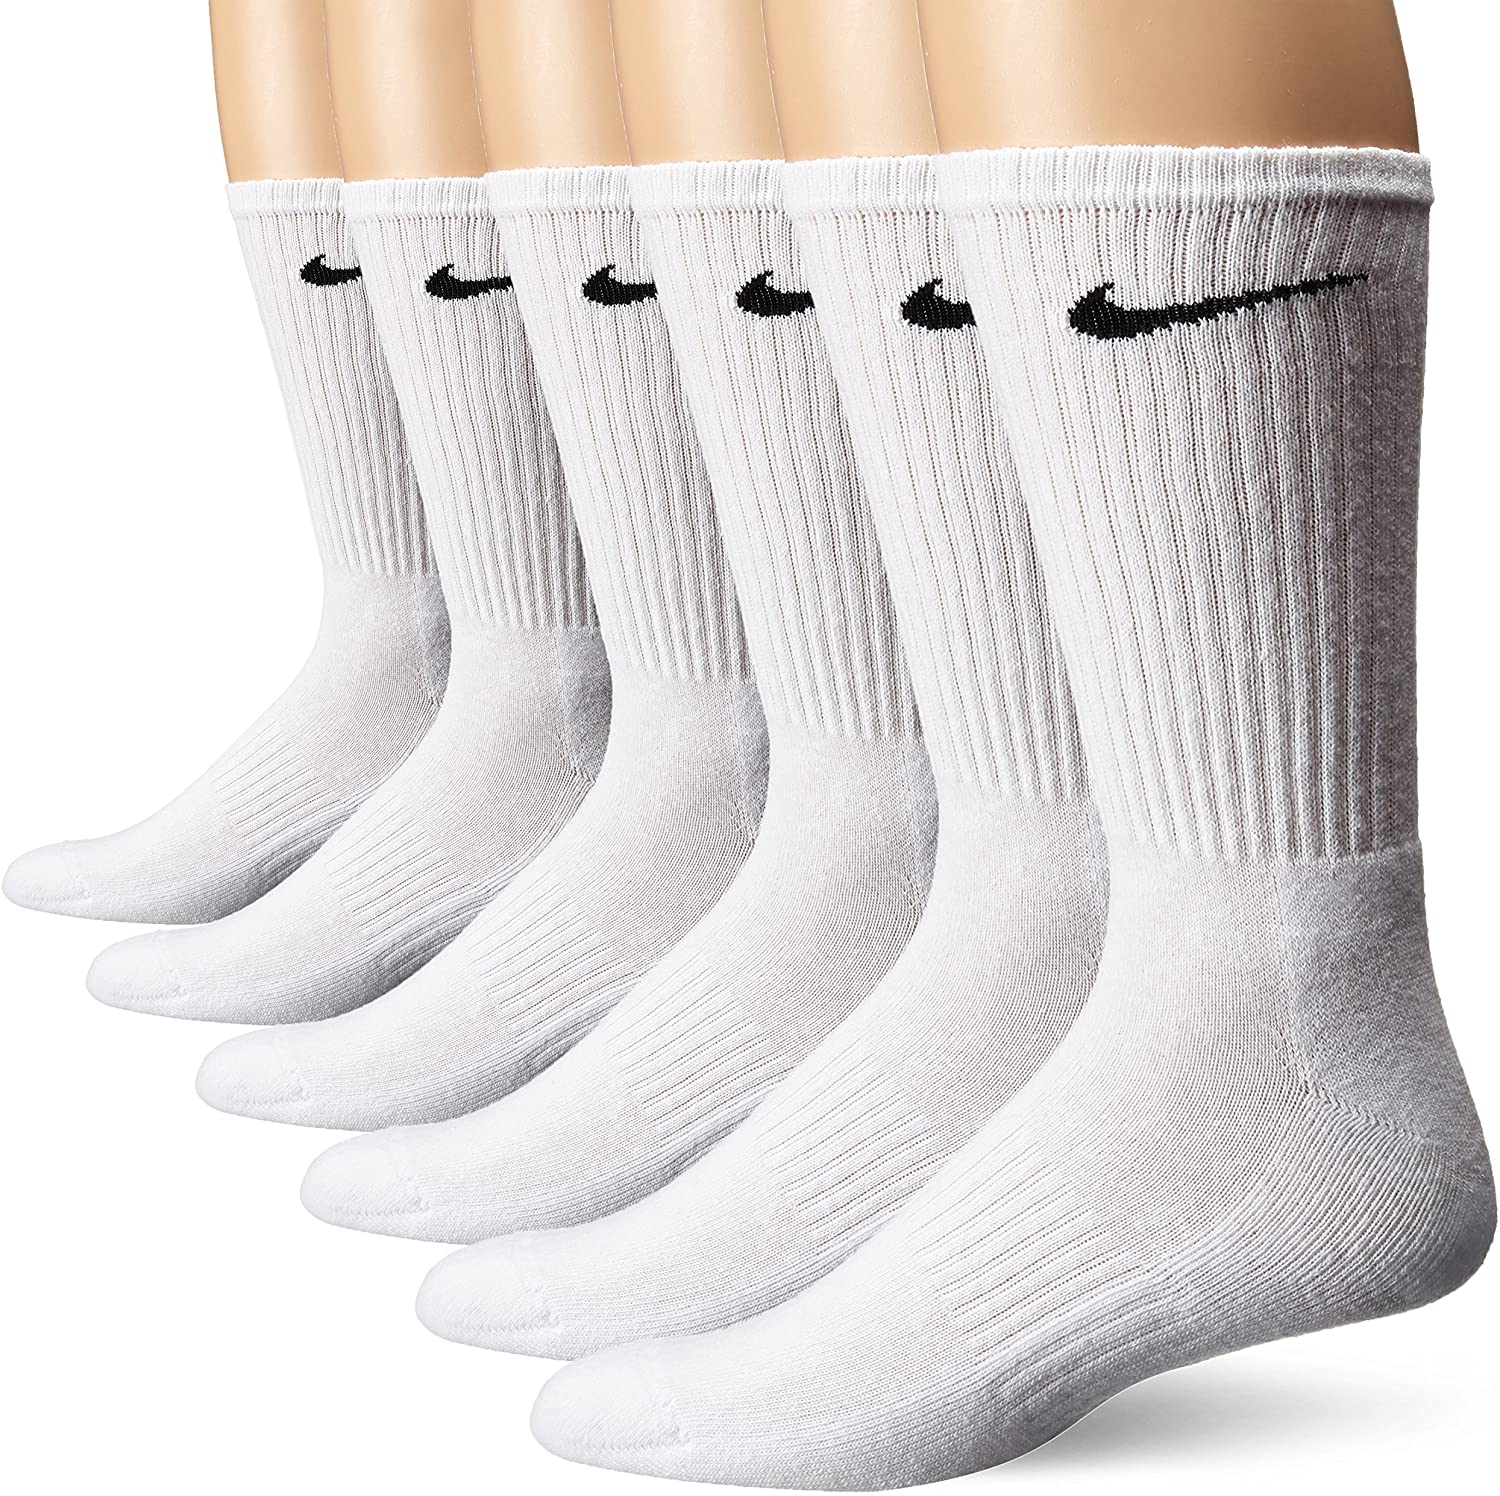 nike performance cushion low rise socks